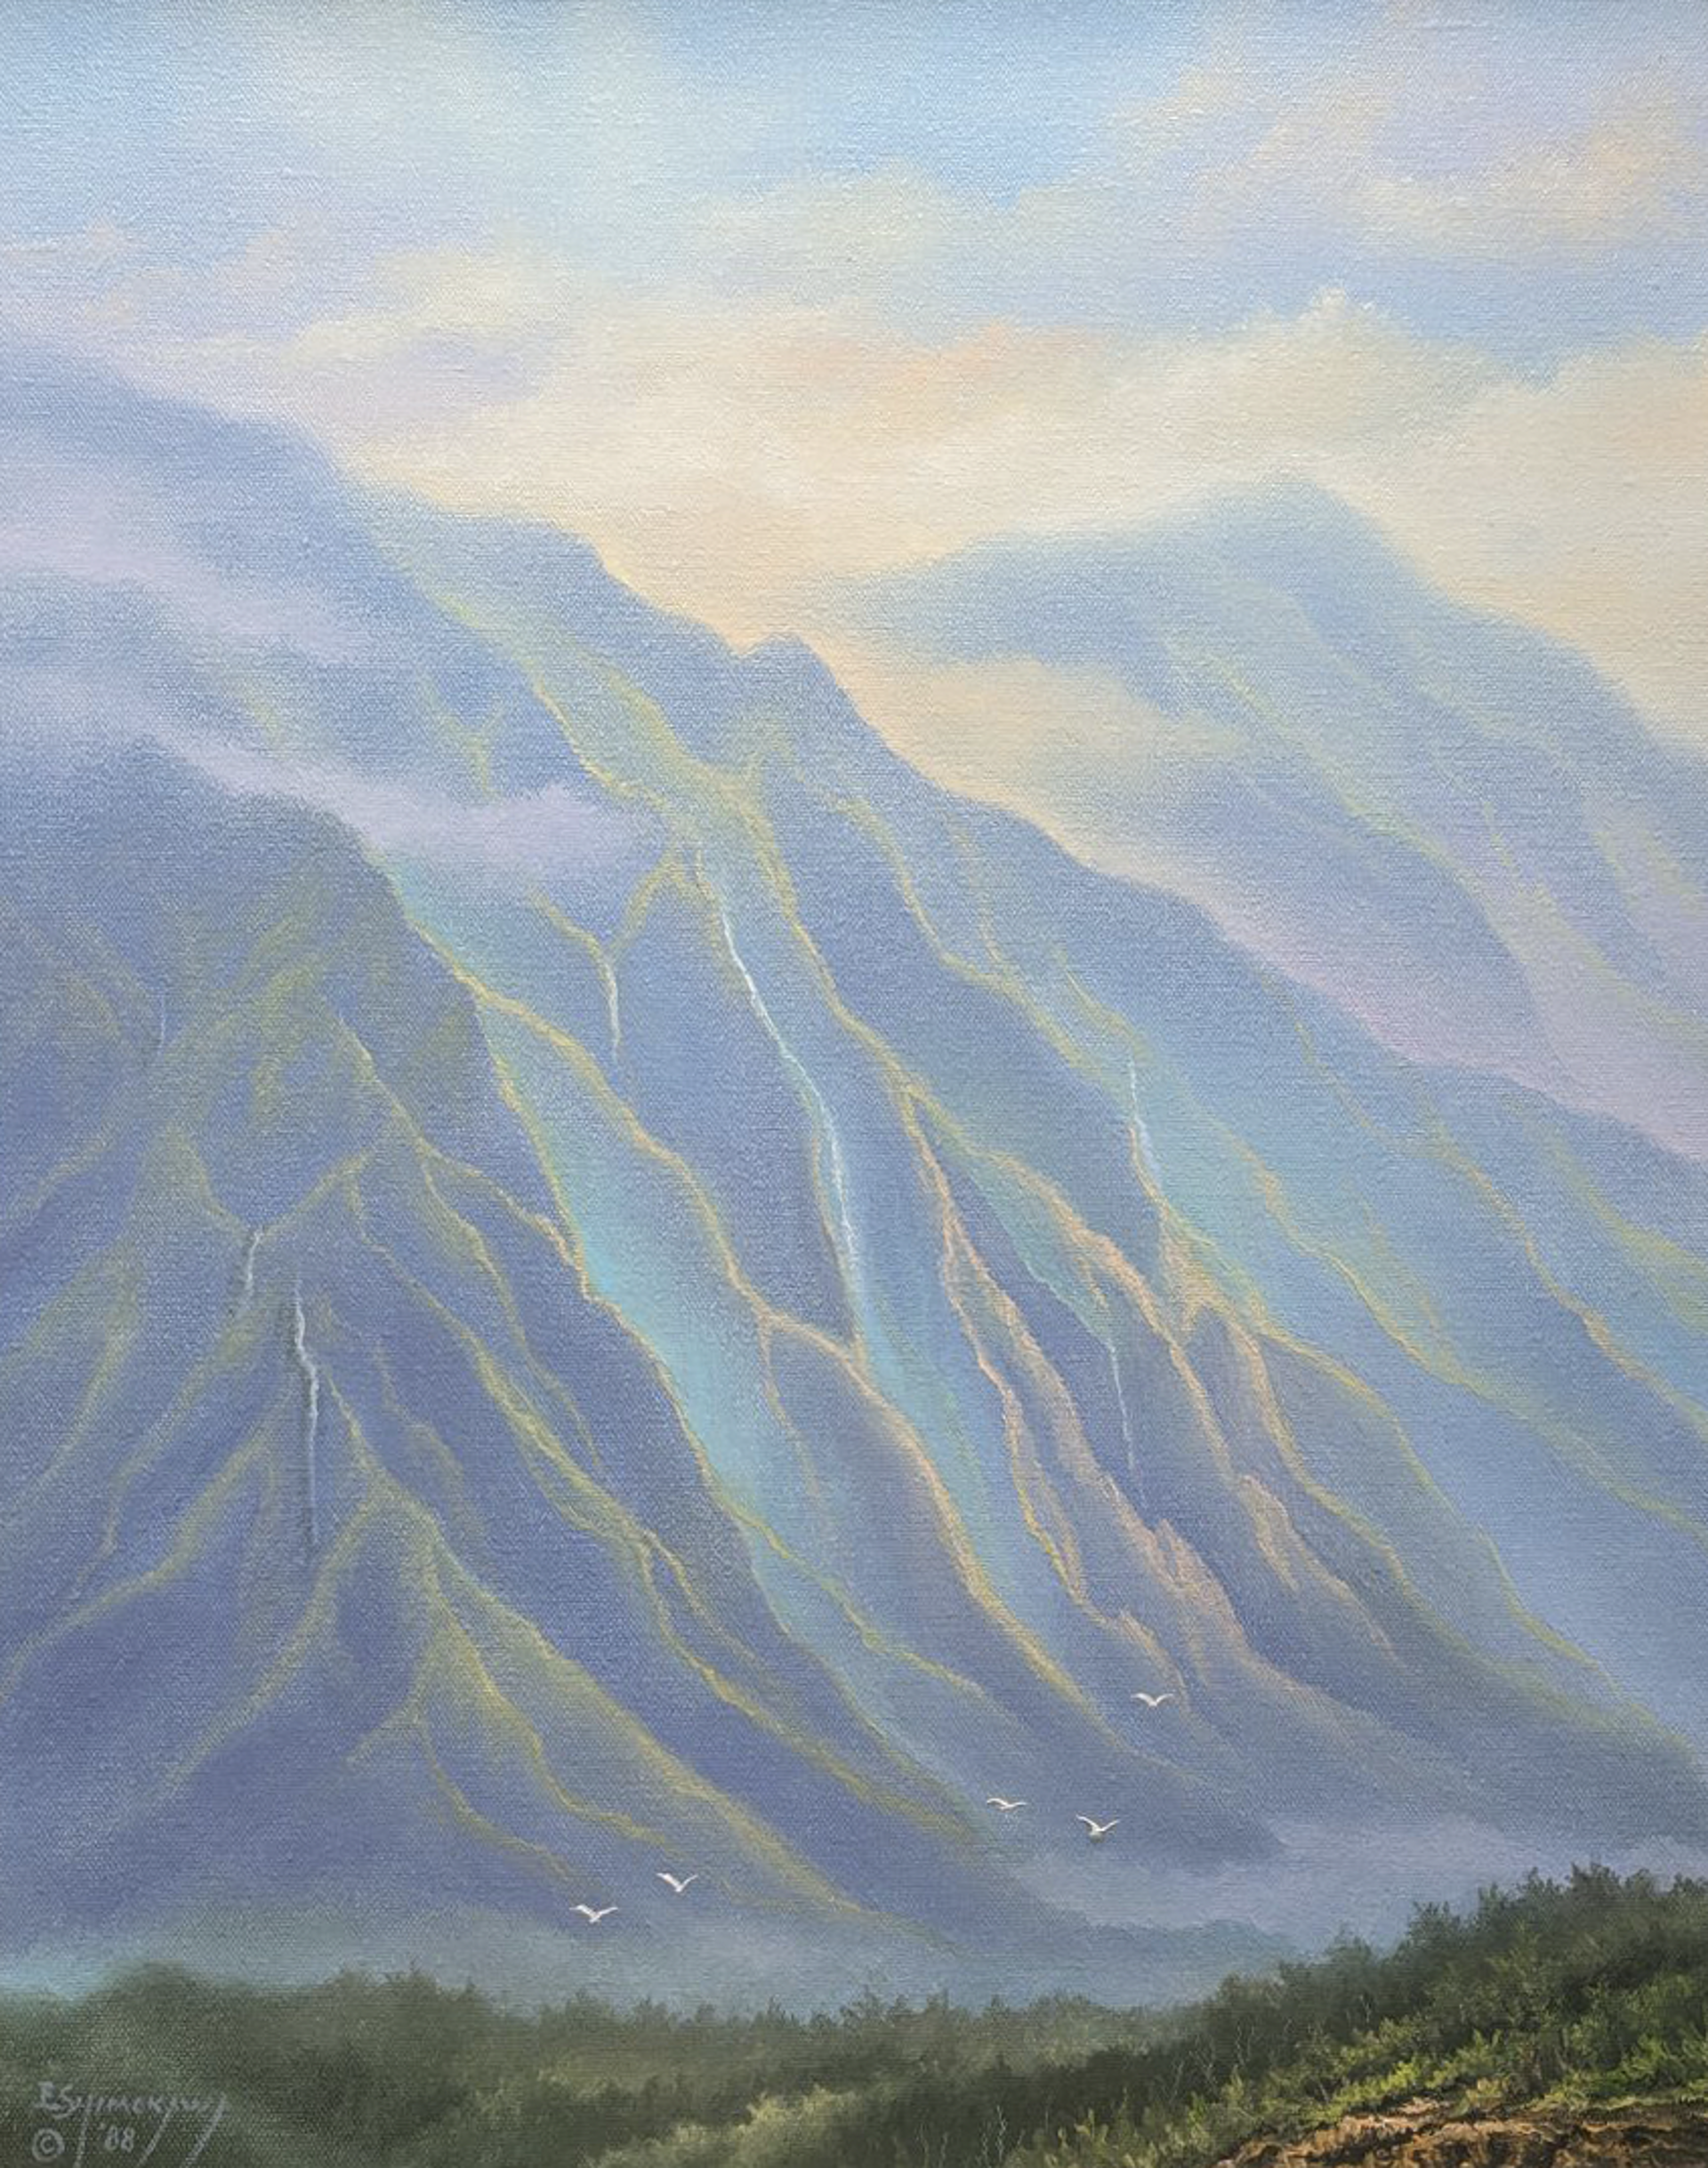 Koʻolau Range, North Oʻahu by Earl Shimokawa